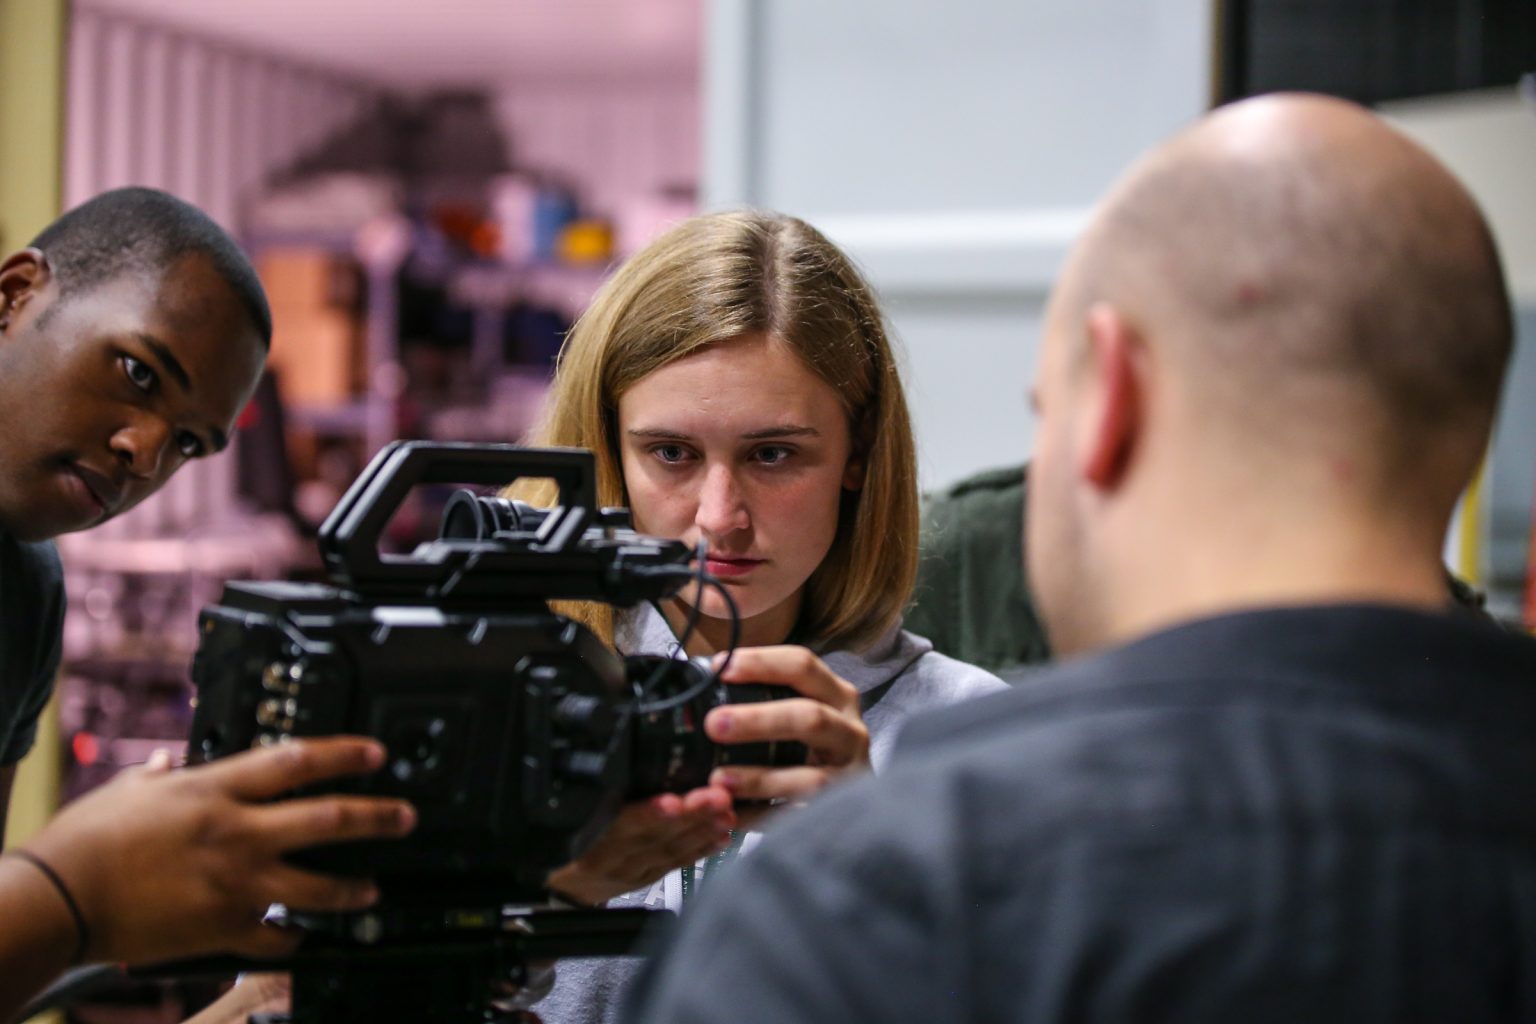 Georgia Film Academy students adjust a camera